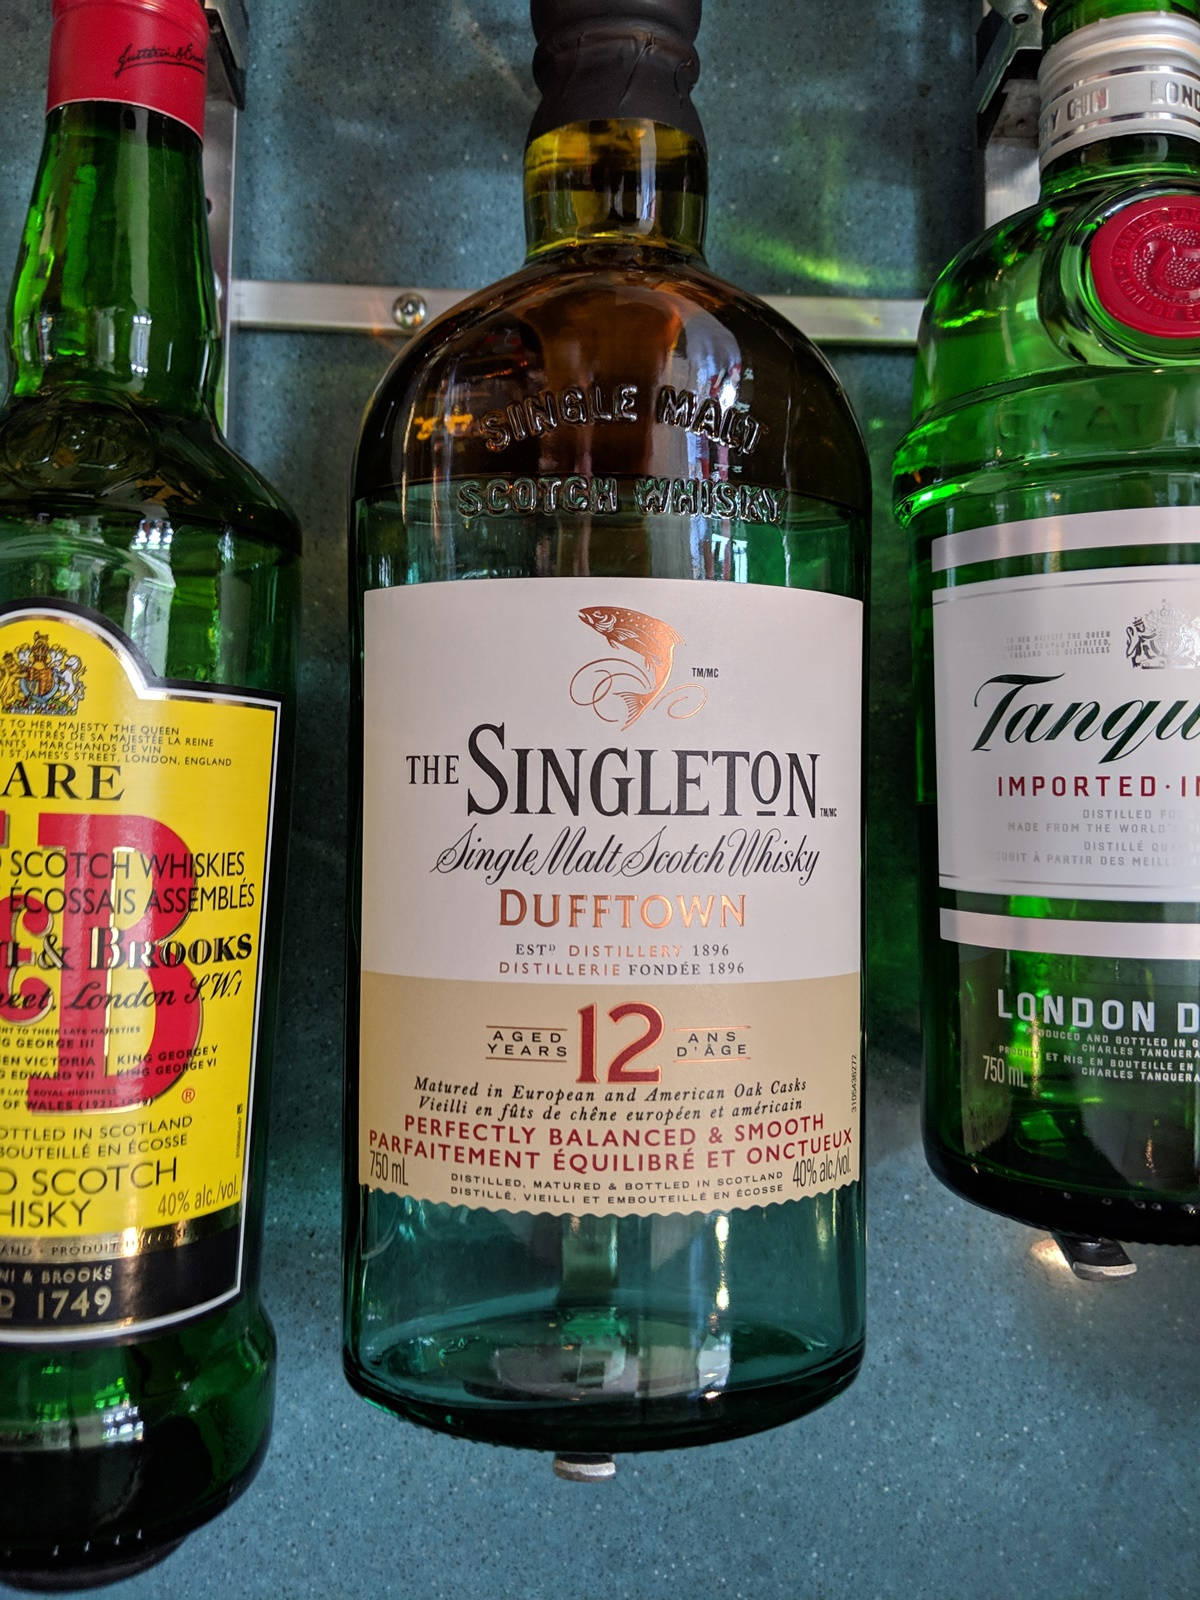 Caption: "A Bottle of Singleton Whisky on a Bar Counter" Wallpaper